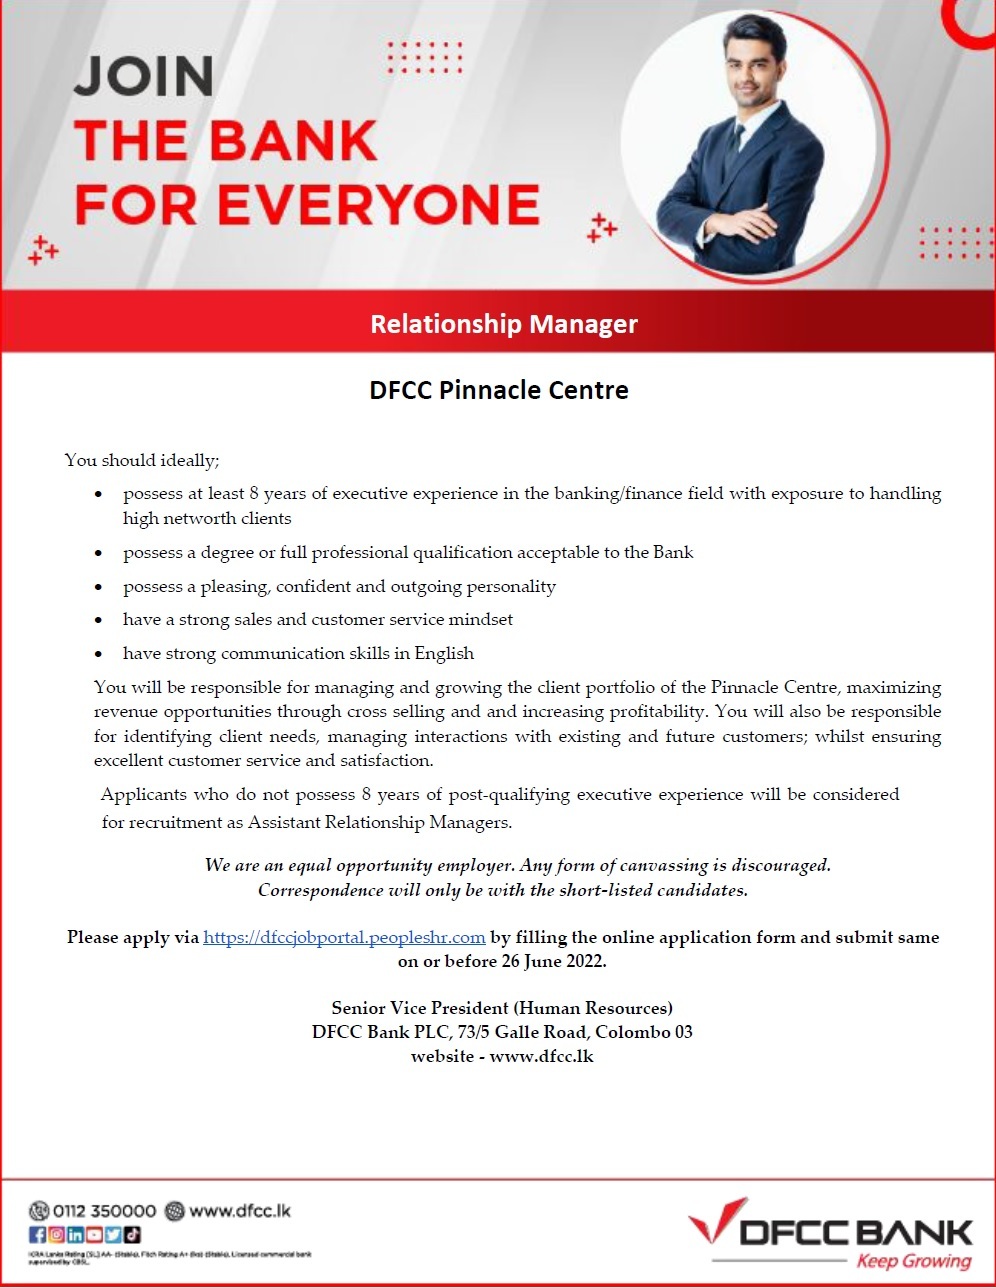 DFCC Bank Relationship Manager Vacancy at DFCC Pinnacle Centre Jobs Vacancies